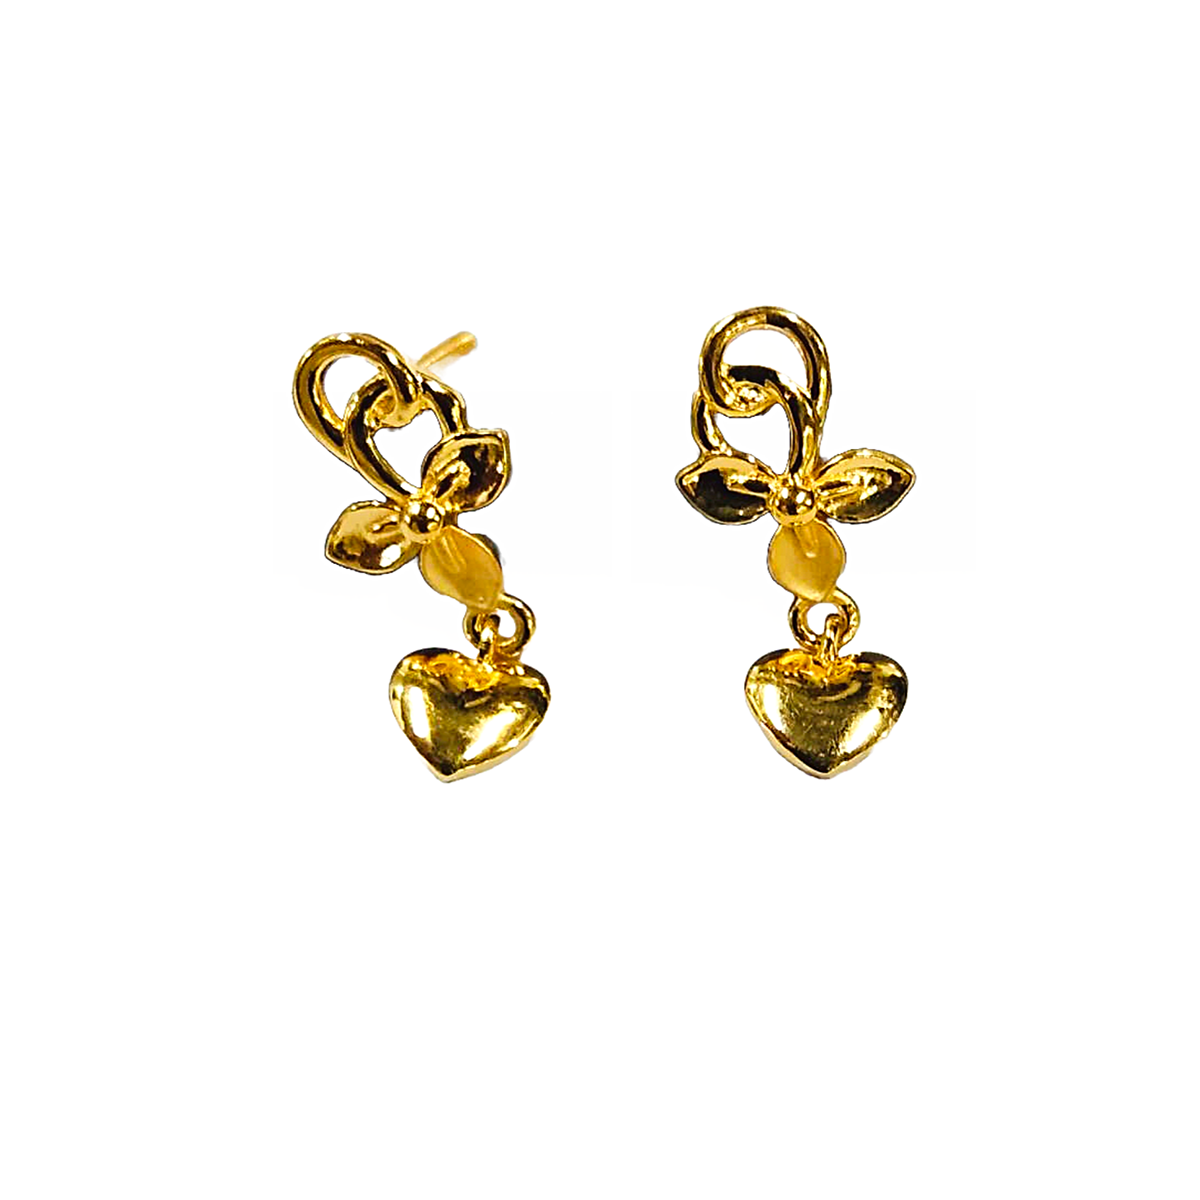 Infinite Love gold earrings